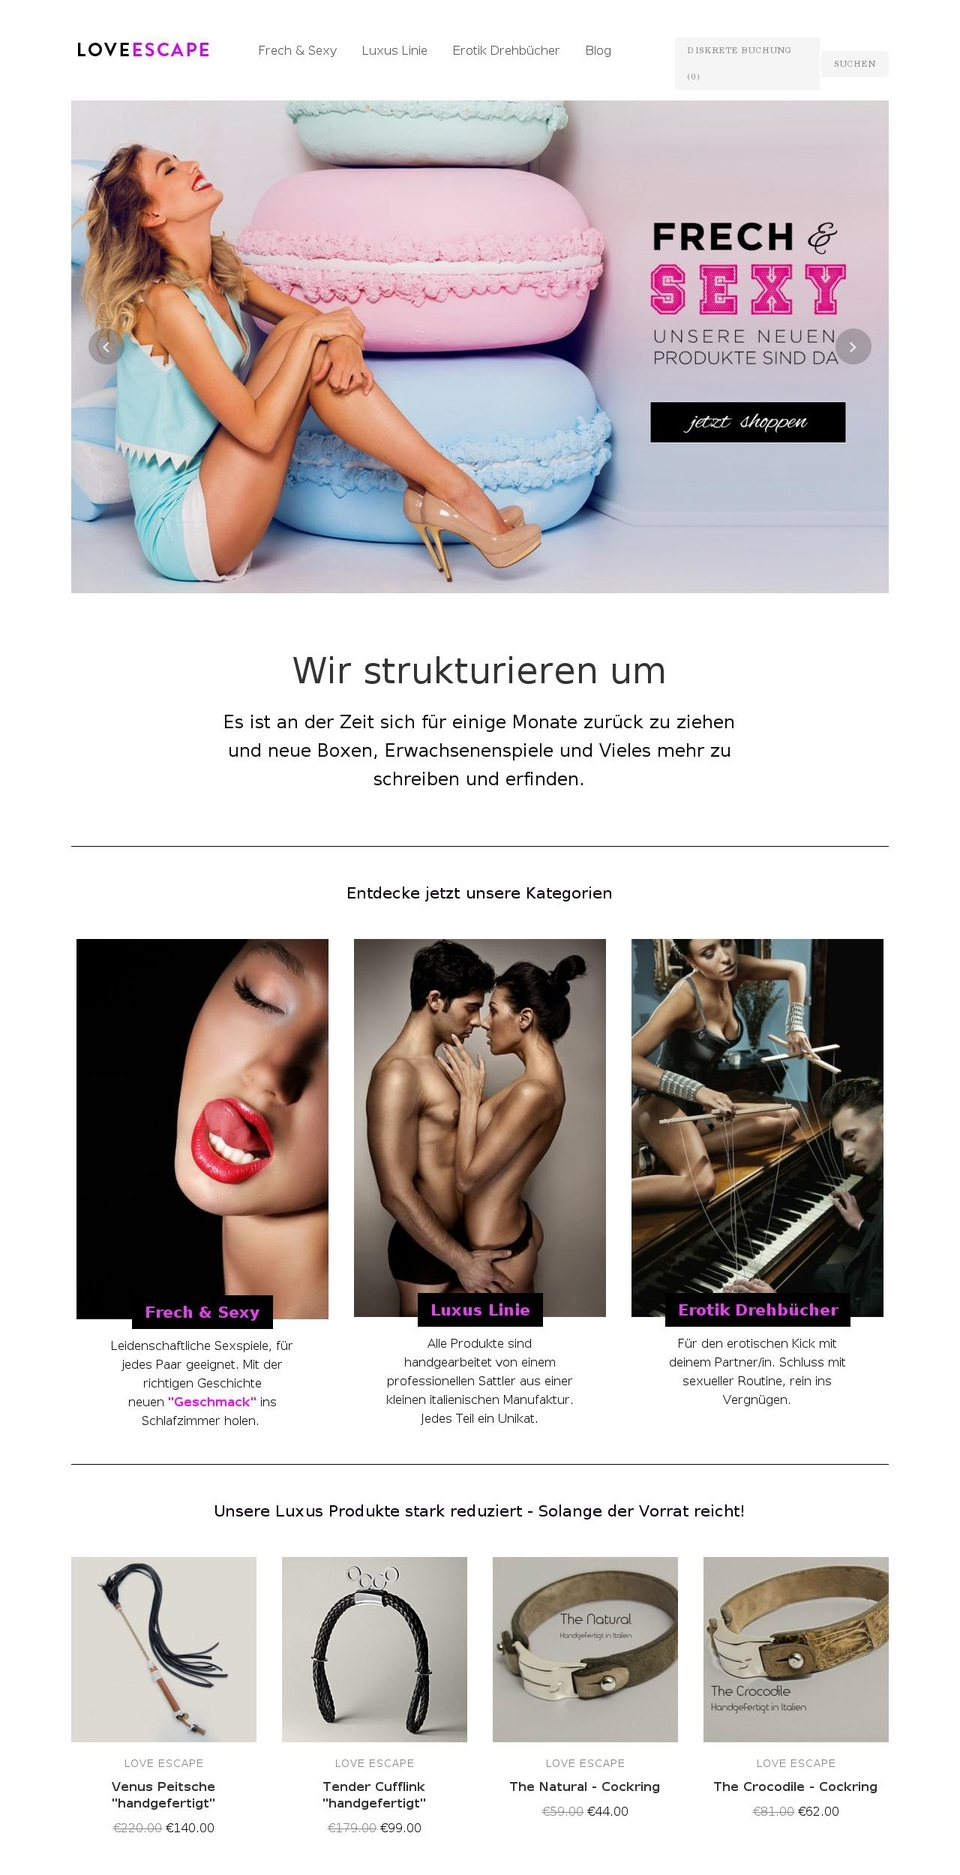 Cypress Shopify theme site example loveescape.de